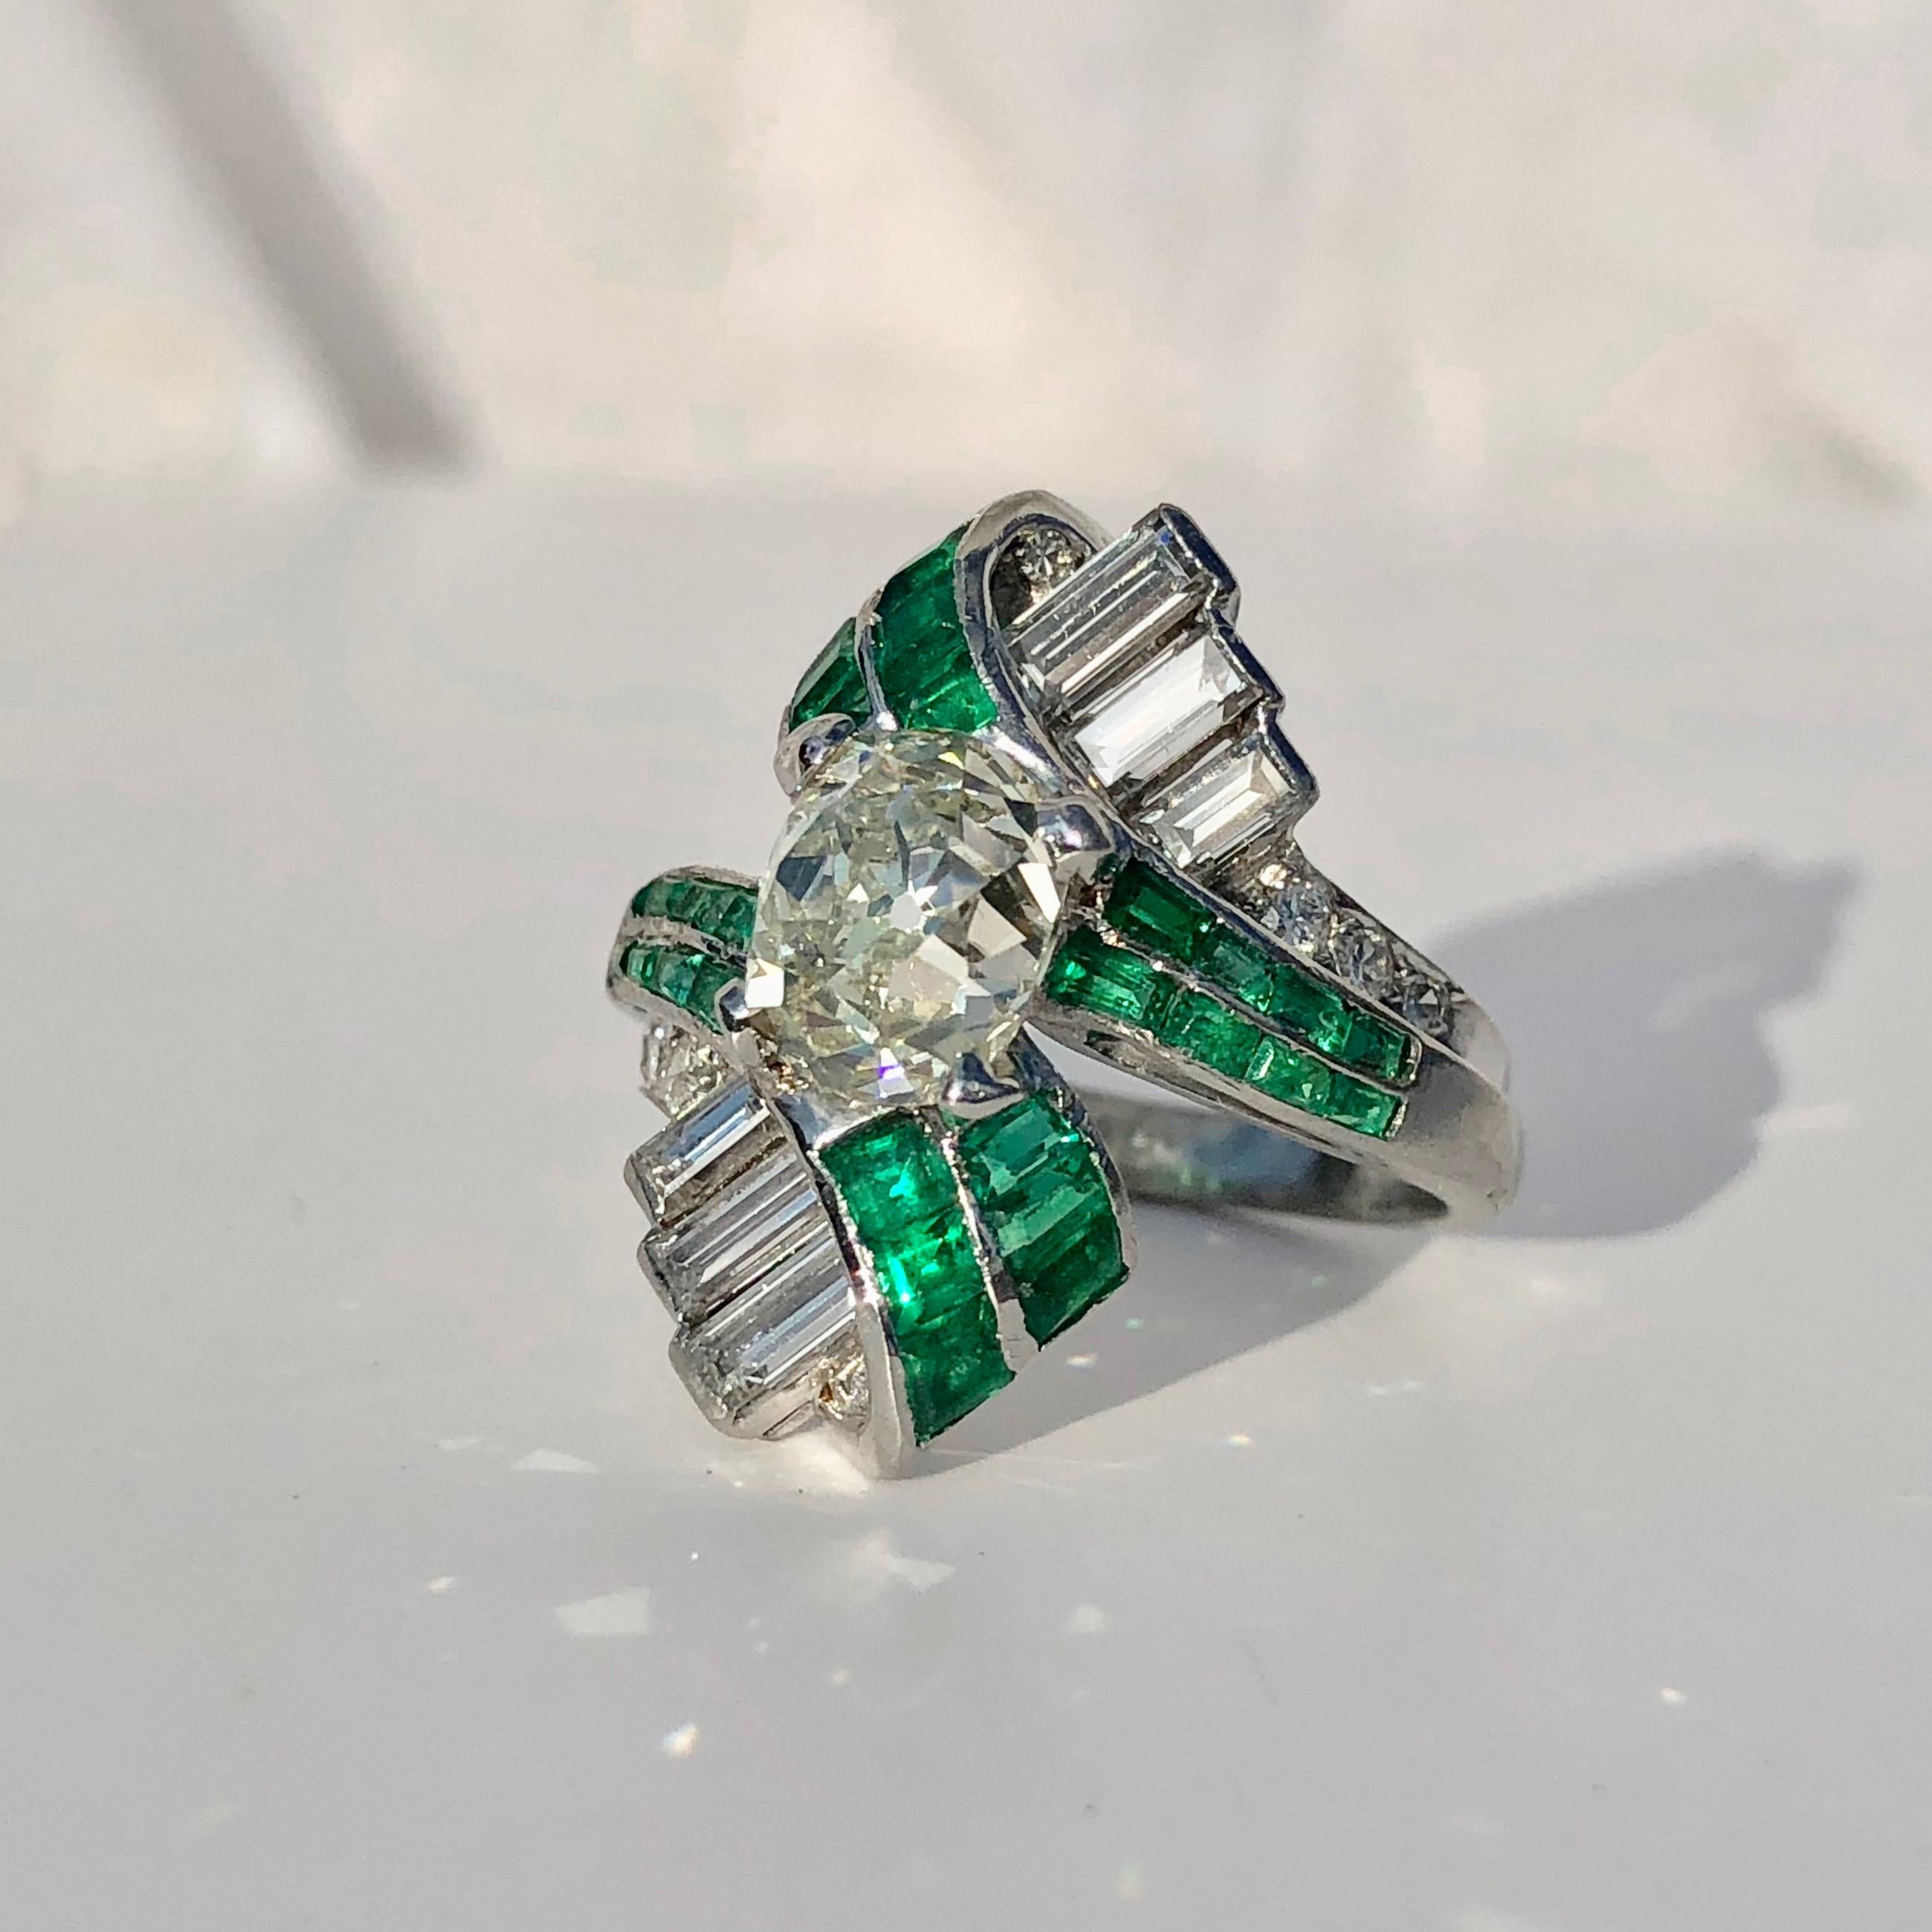 Antique Baguette Emerald And Old Cut Diamond Art Deco Cocktail Engagement Ring  For Sale 1